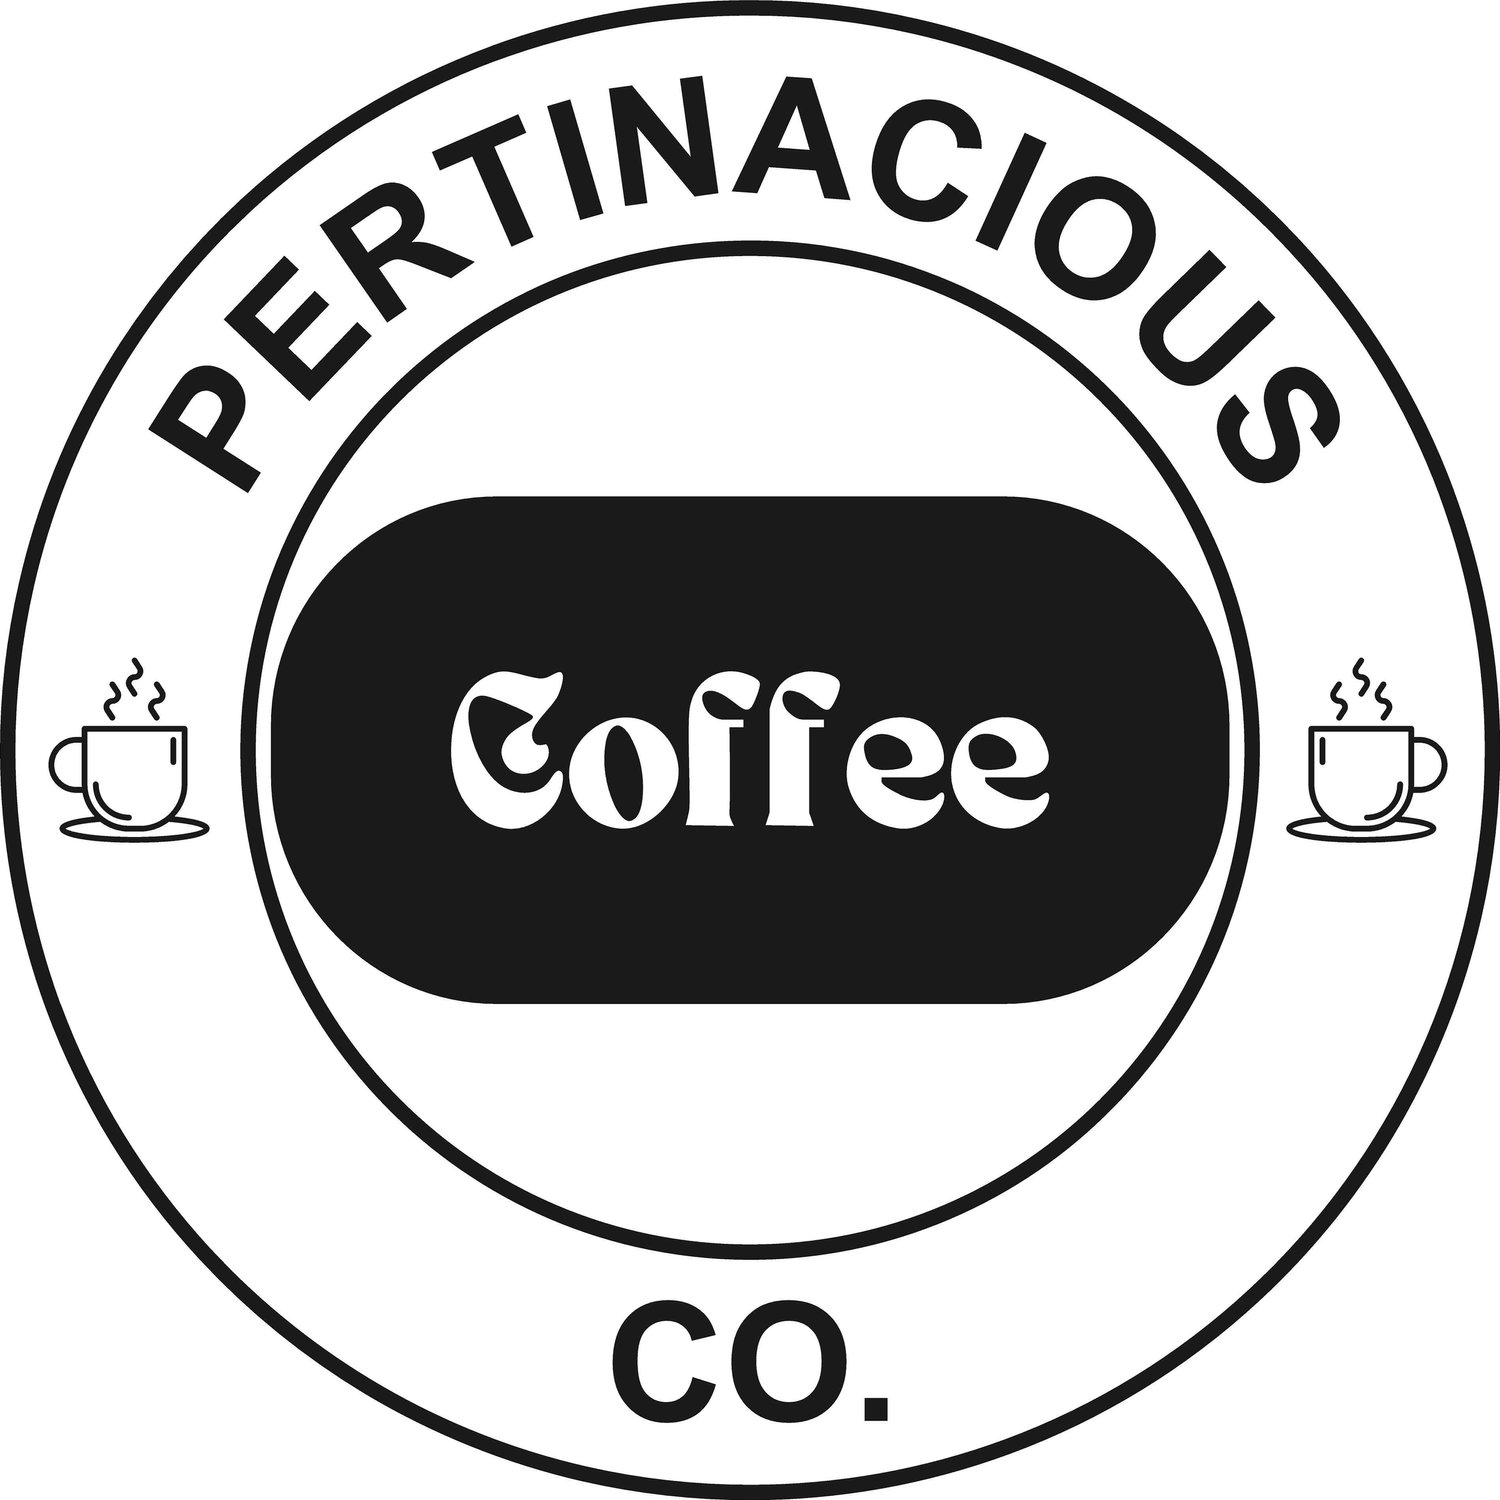 pertinacious coffee co.